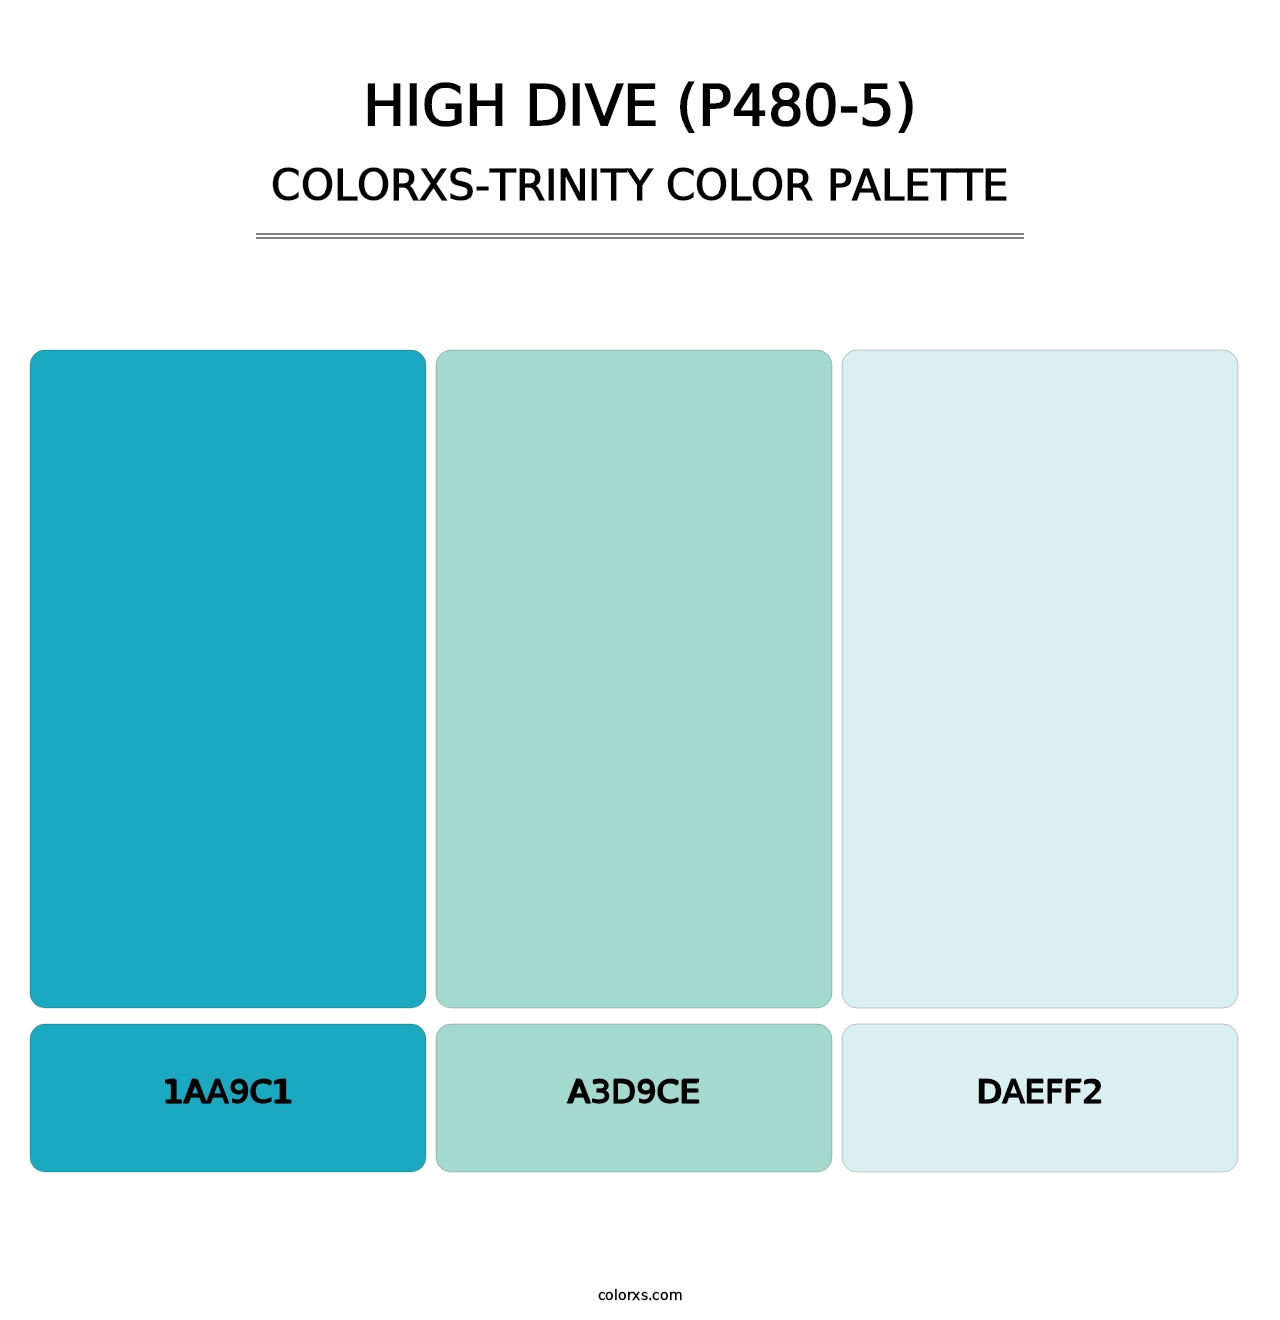 High Dive (P480-5) - Colorxs Trinity Palette